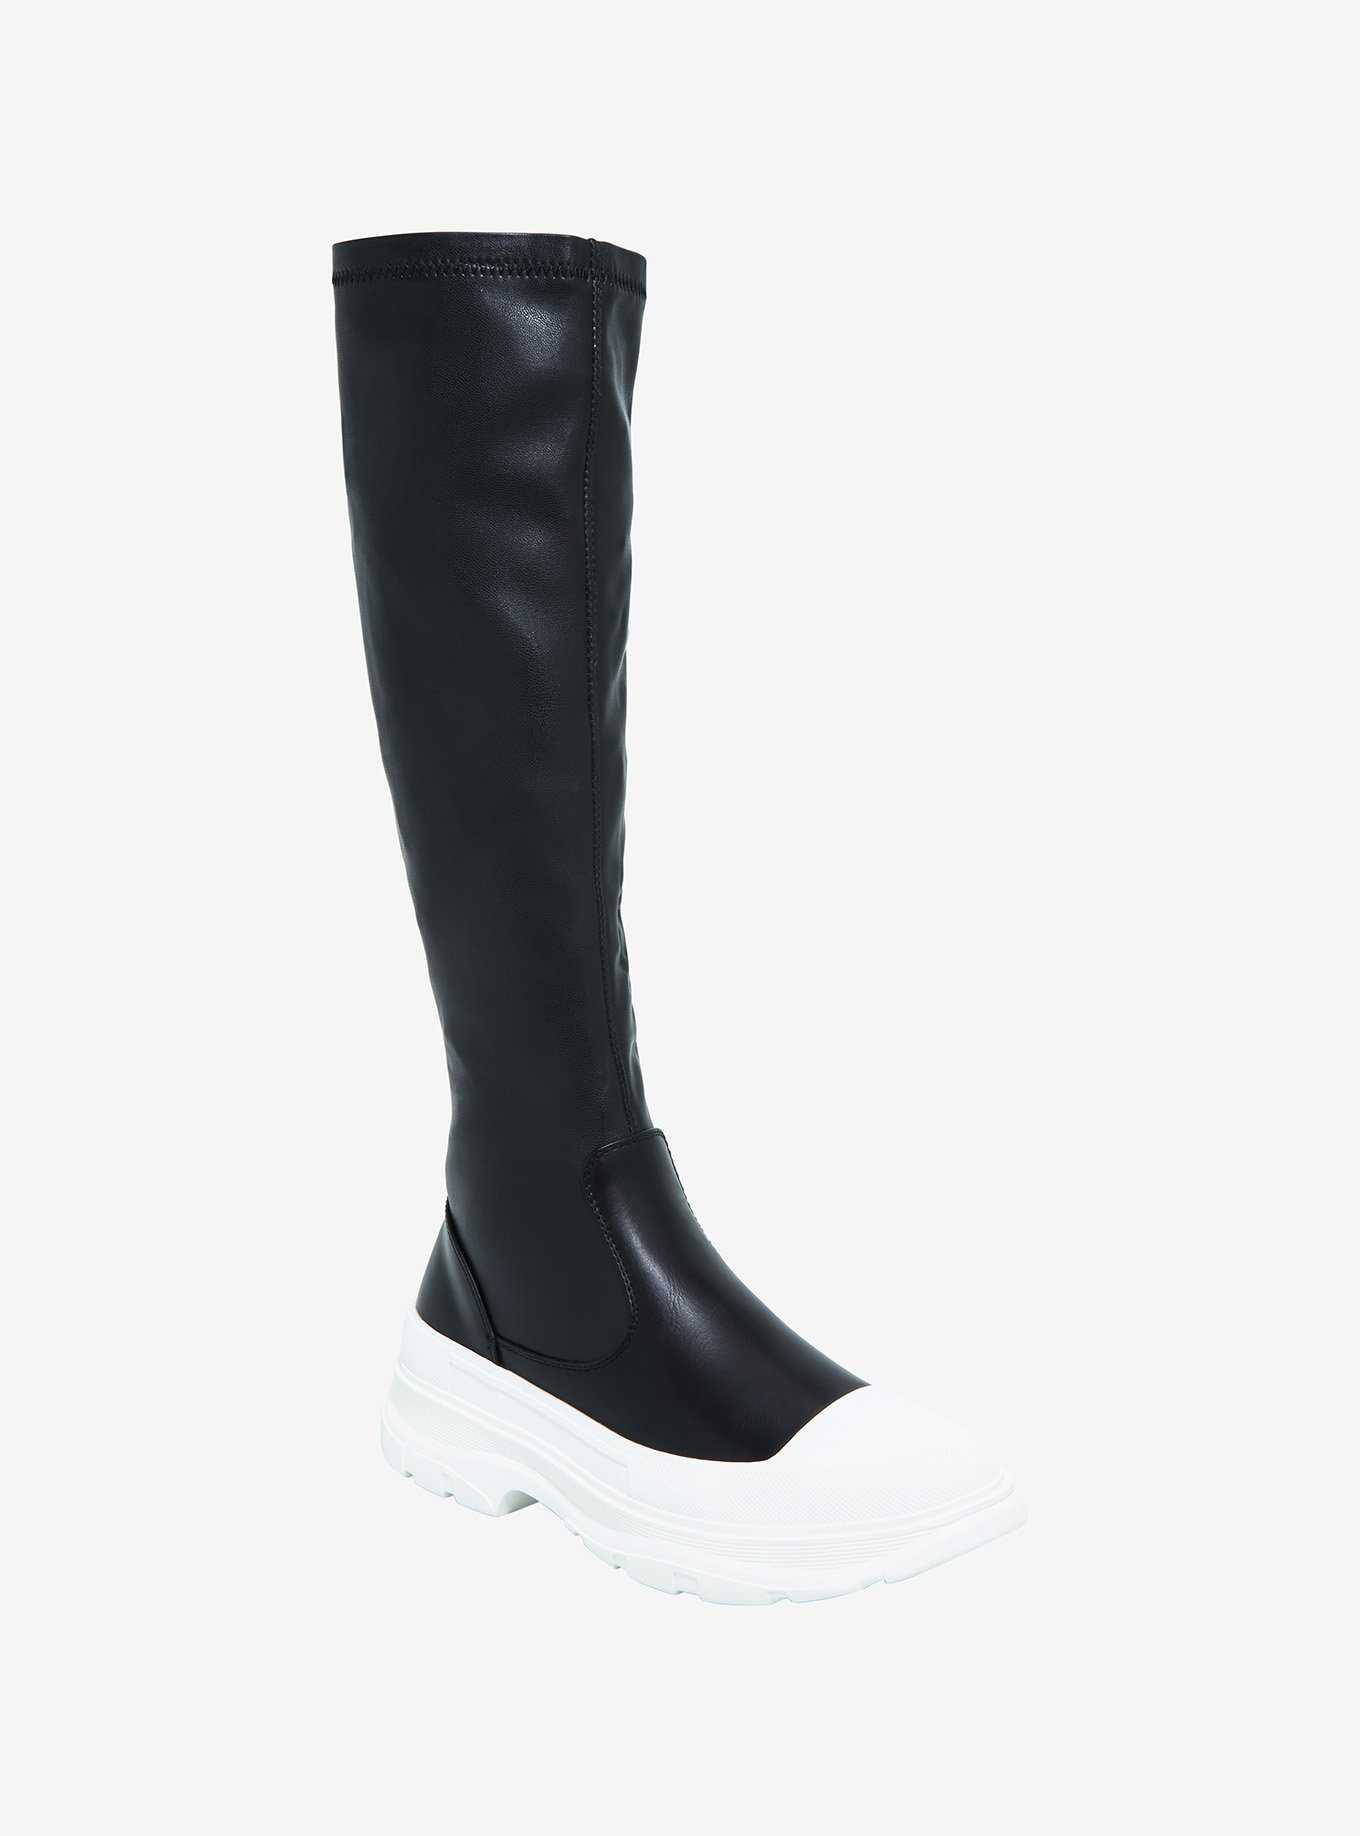 Azalea Wang Black & White Knee-High Stretch Sneakers, , hi-res